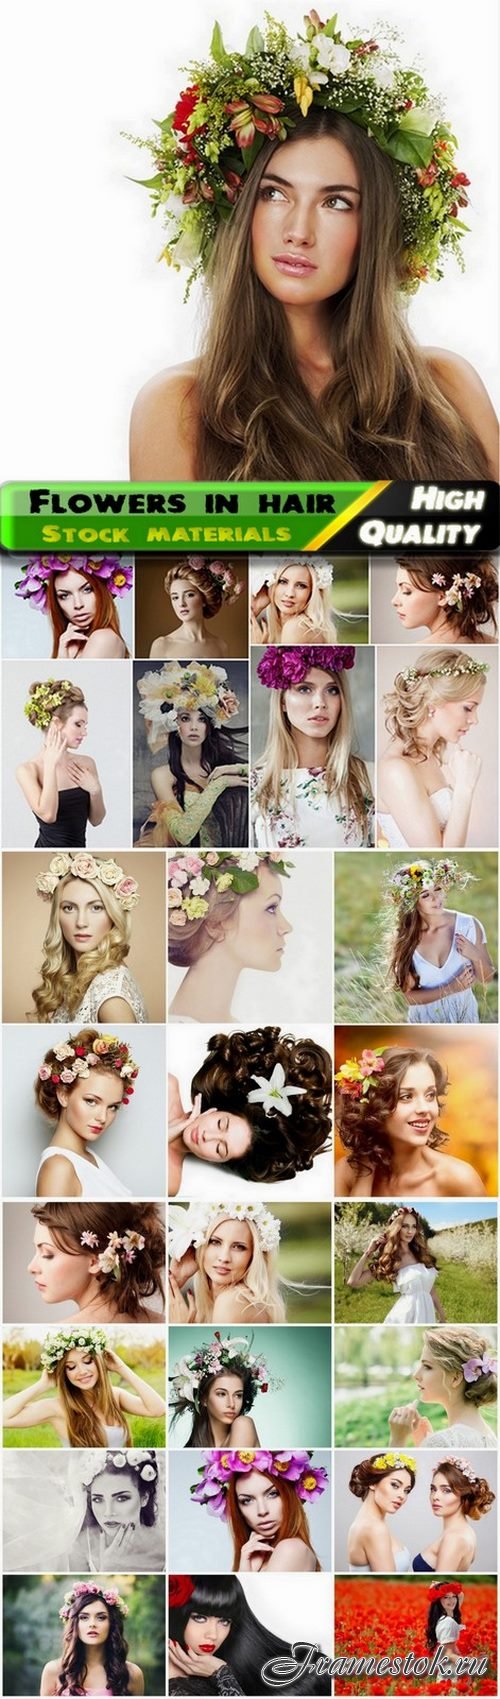 Beautiful women with flowers in hair - 25 HQ Jpg